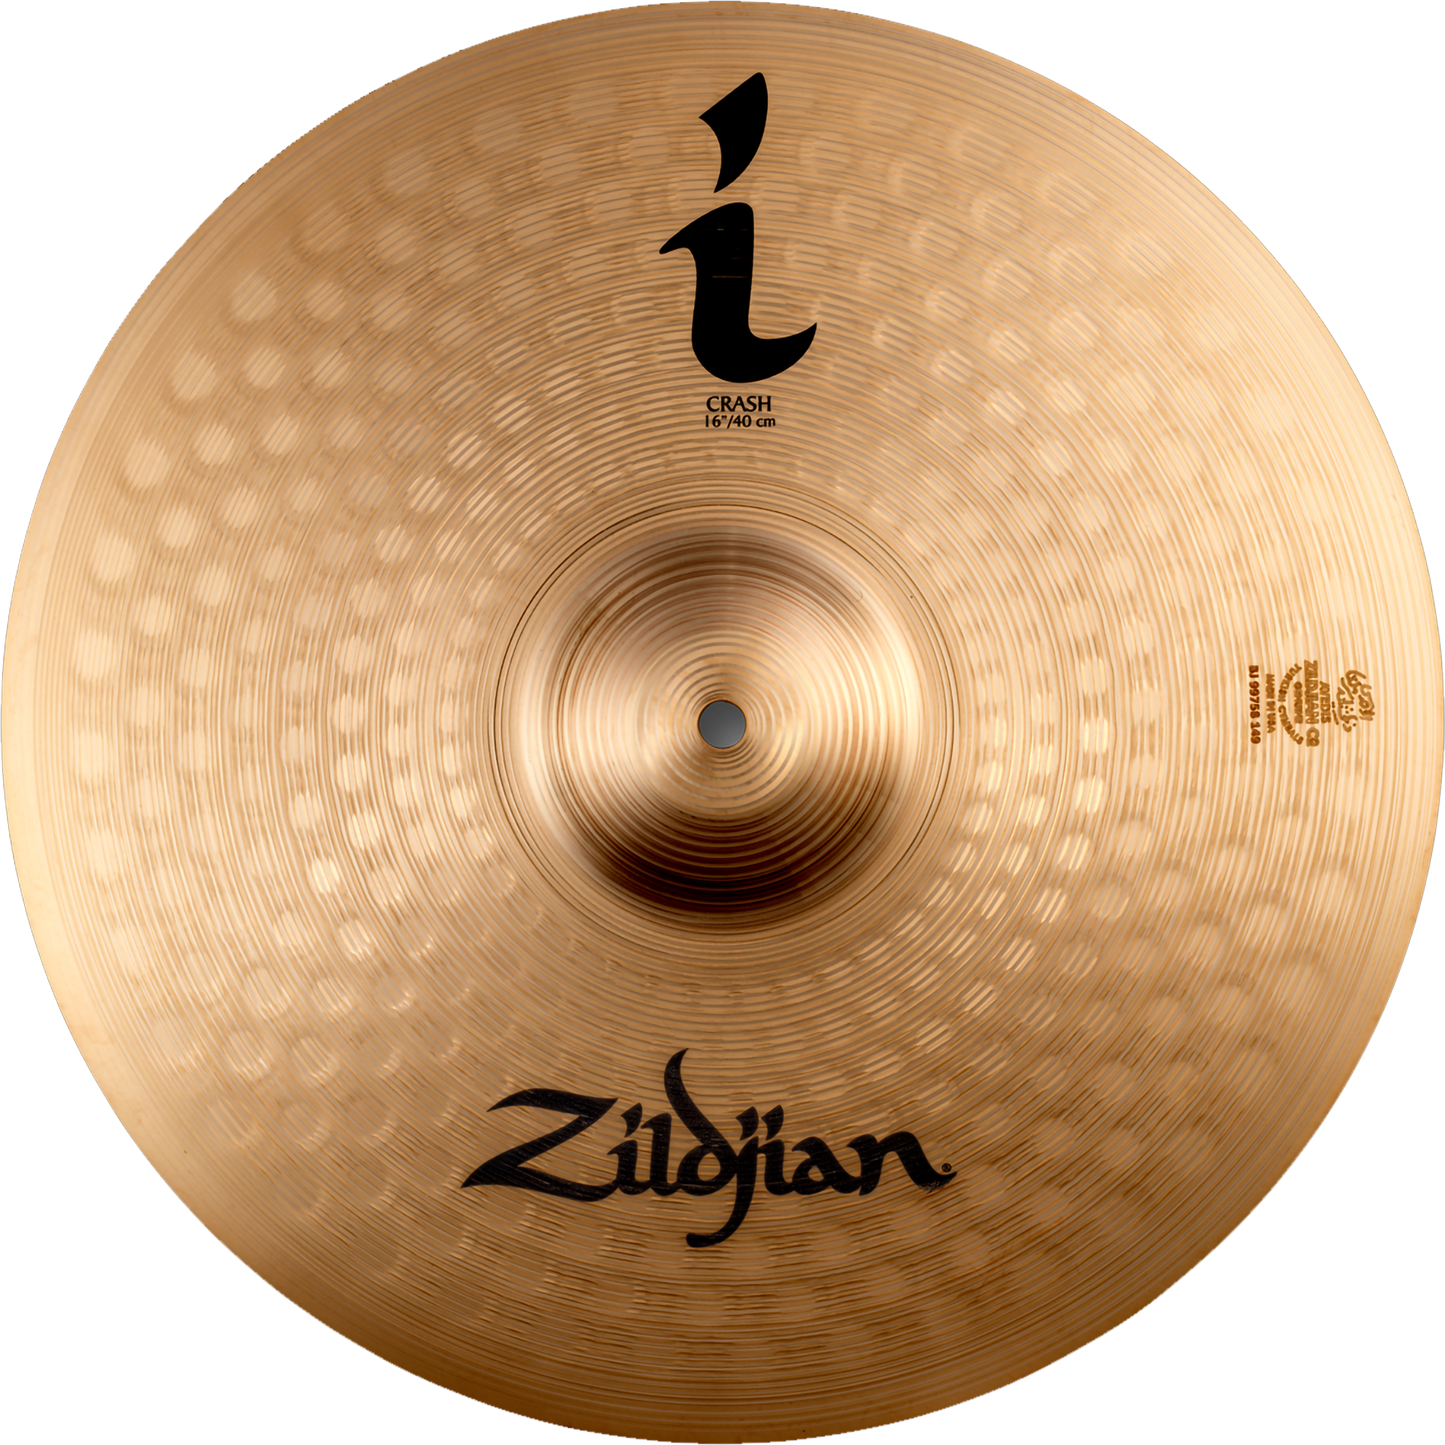 Zildjian I Family Standard Gig Cymbal Pack